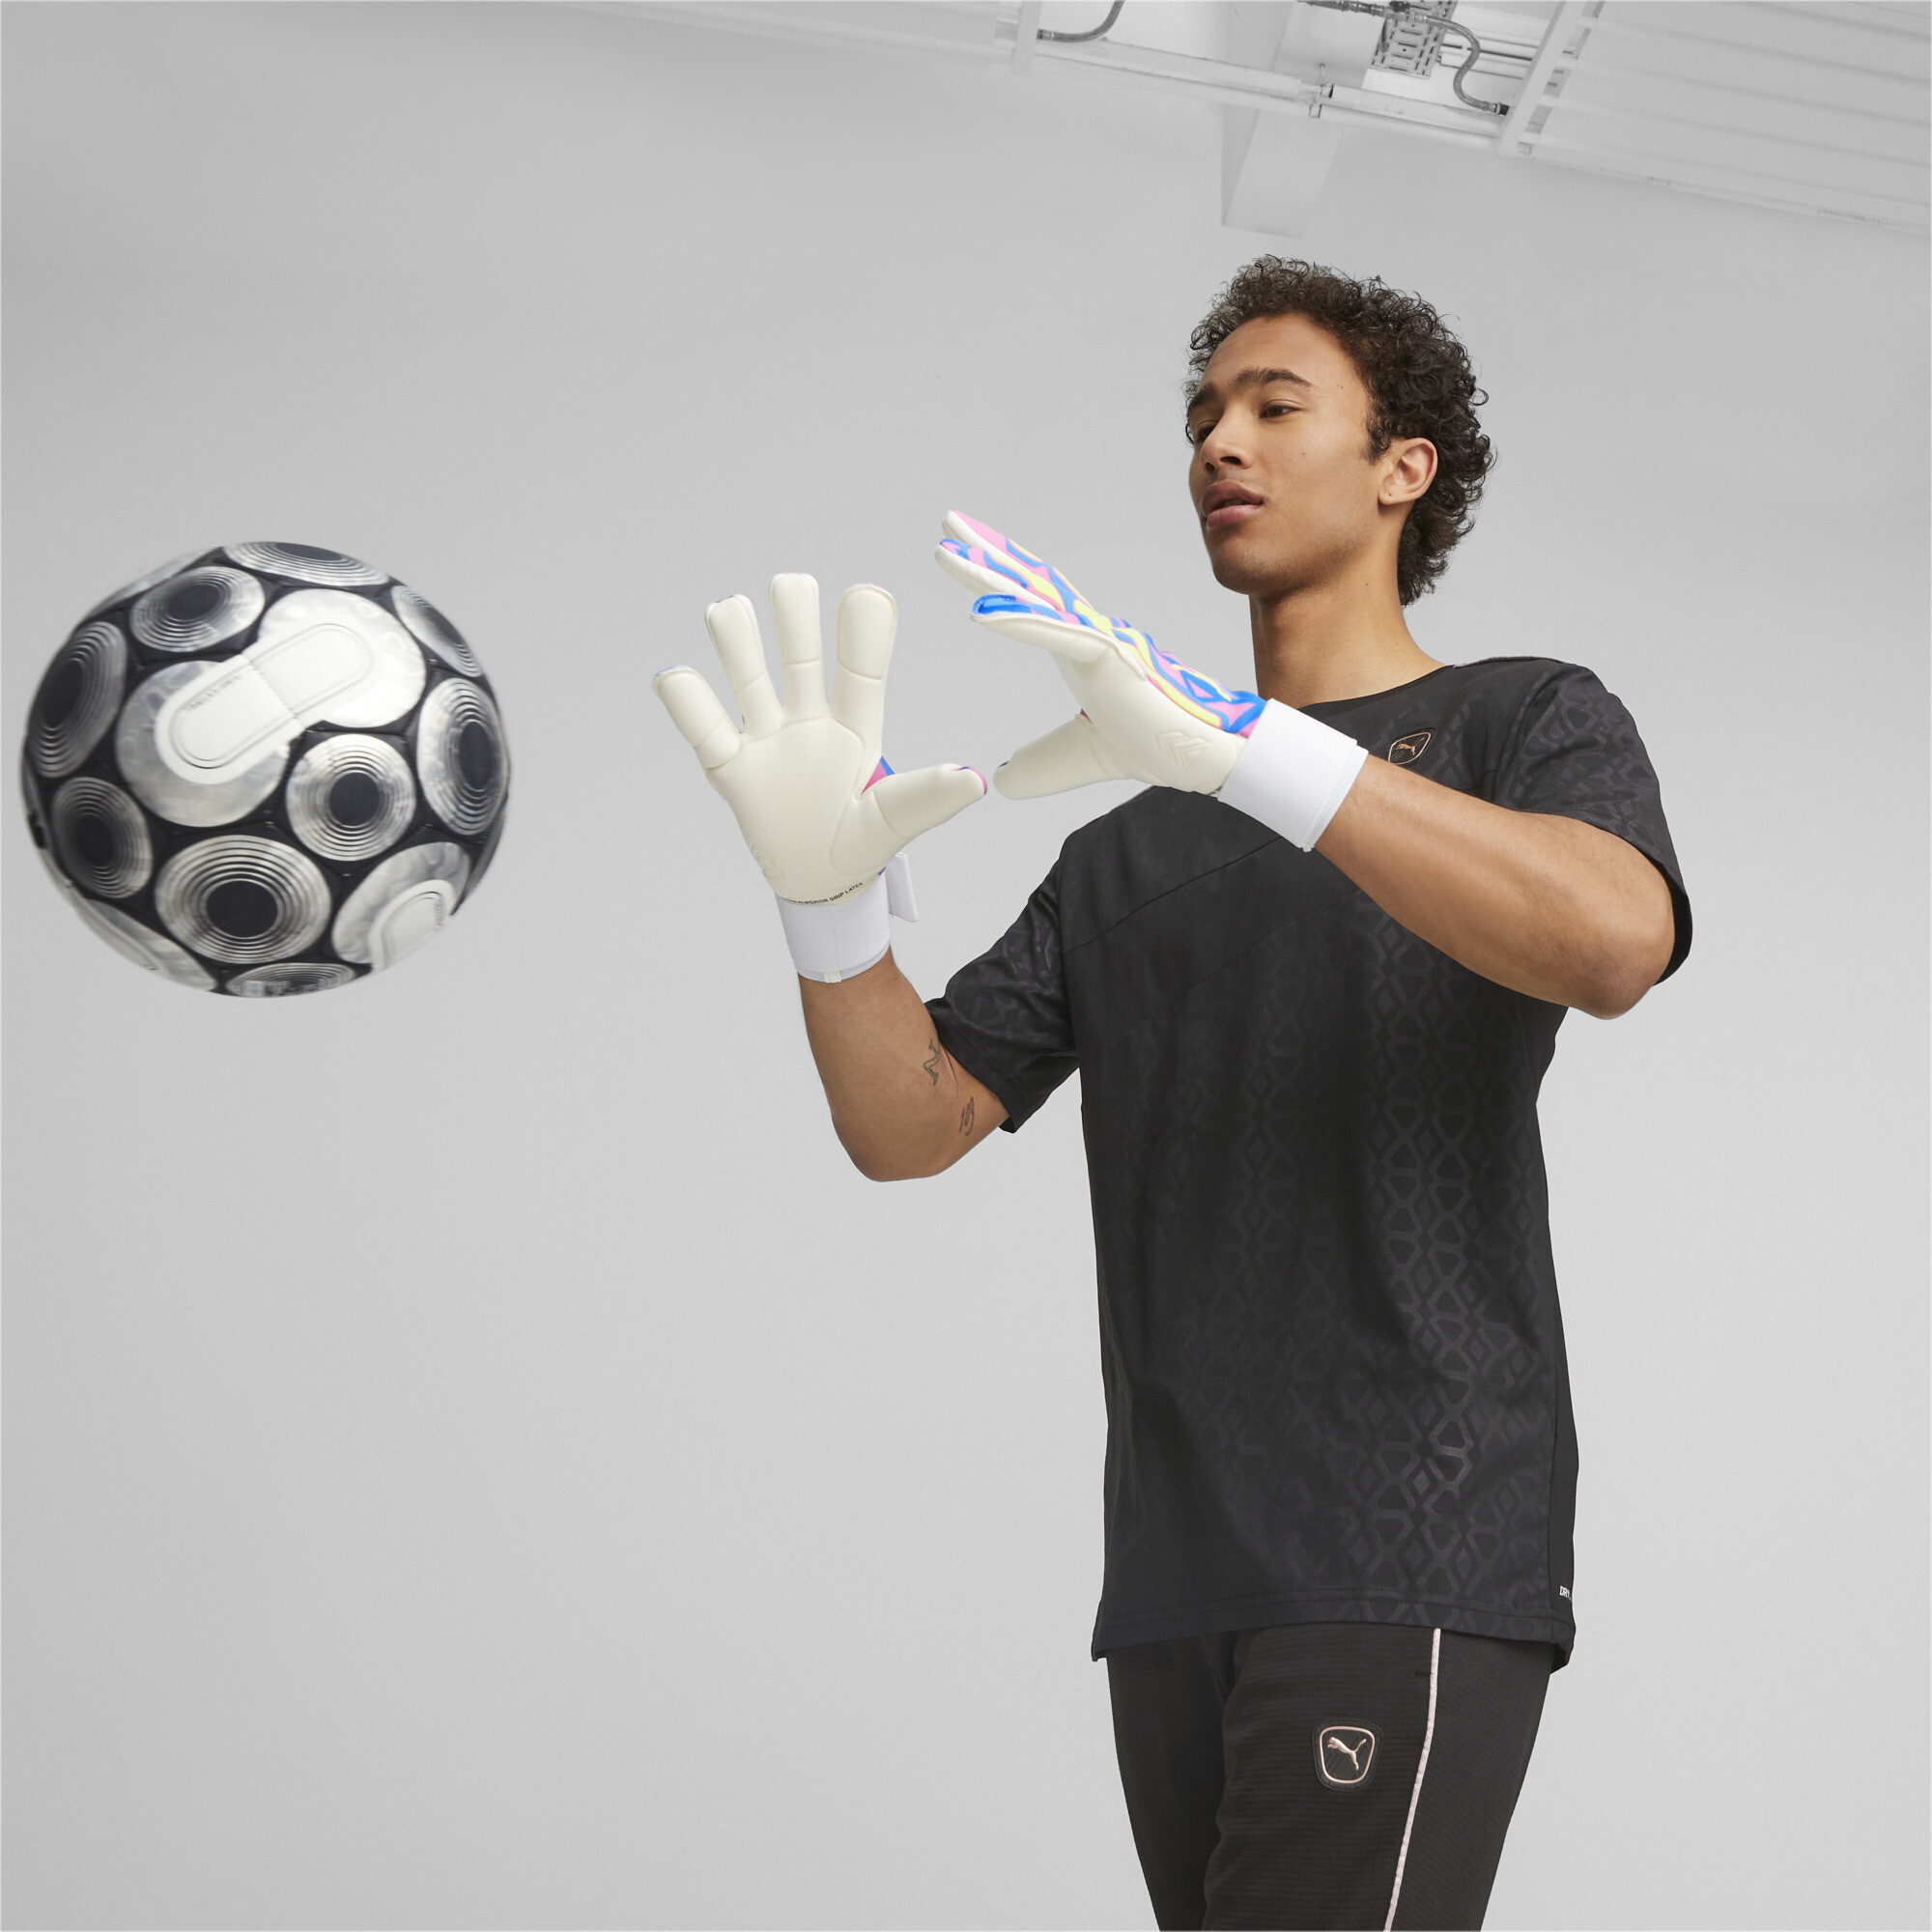 Puma ULTRA Ultimate ENERGY Hybrid Football Goalkeeper Gloves, Blue, Size 10.5, Accessories